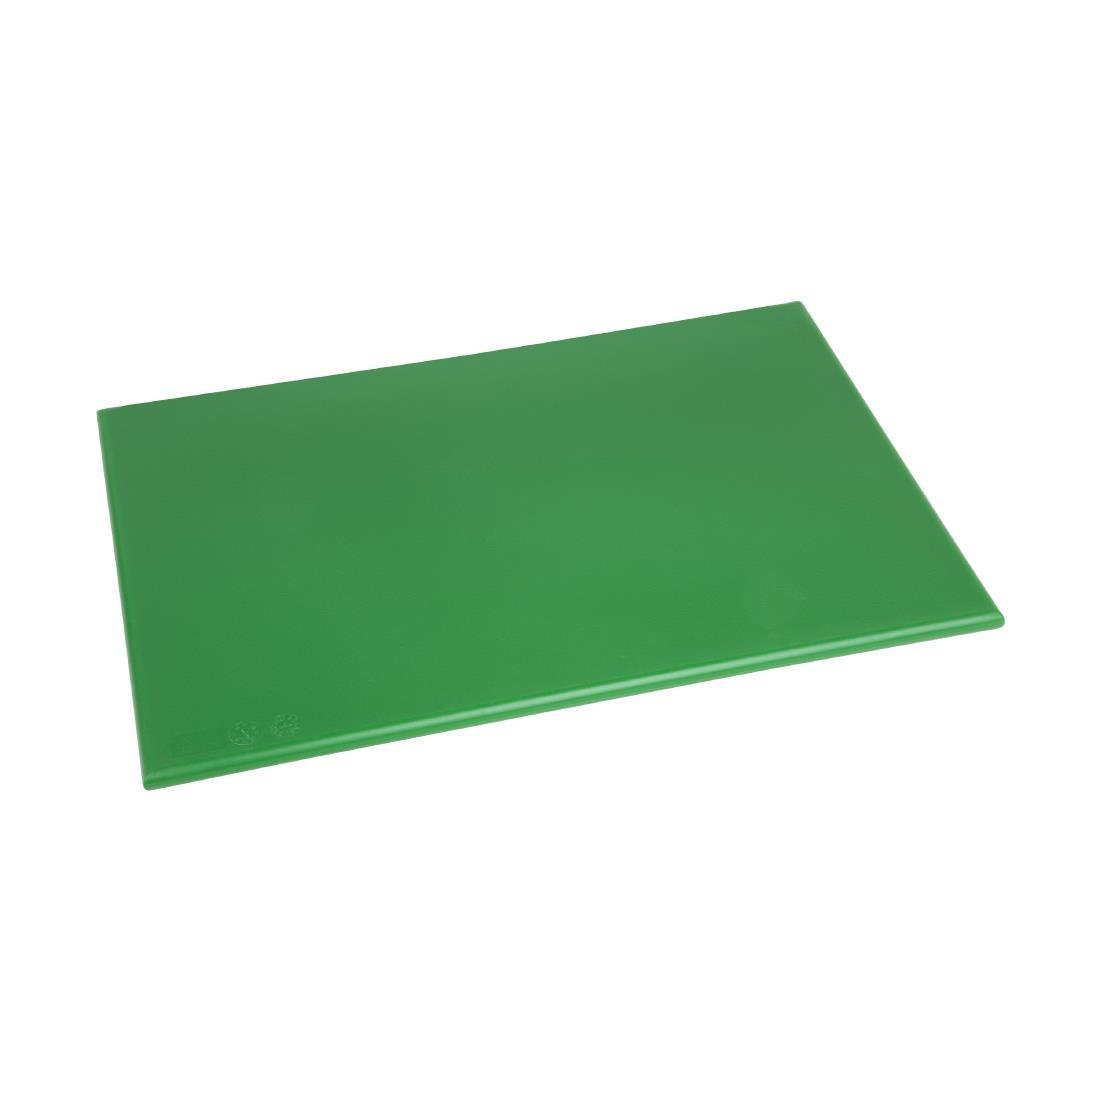 Hygiplas High Density Green Chopping Board Standard - J012  - 1